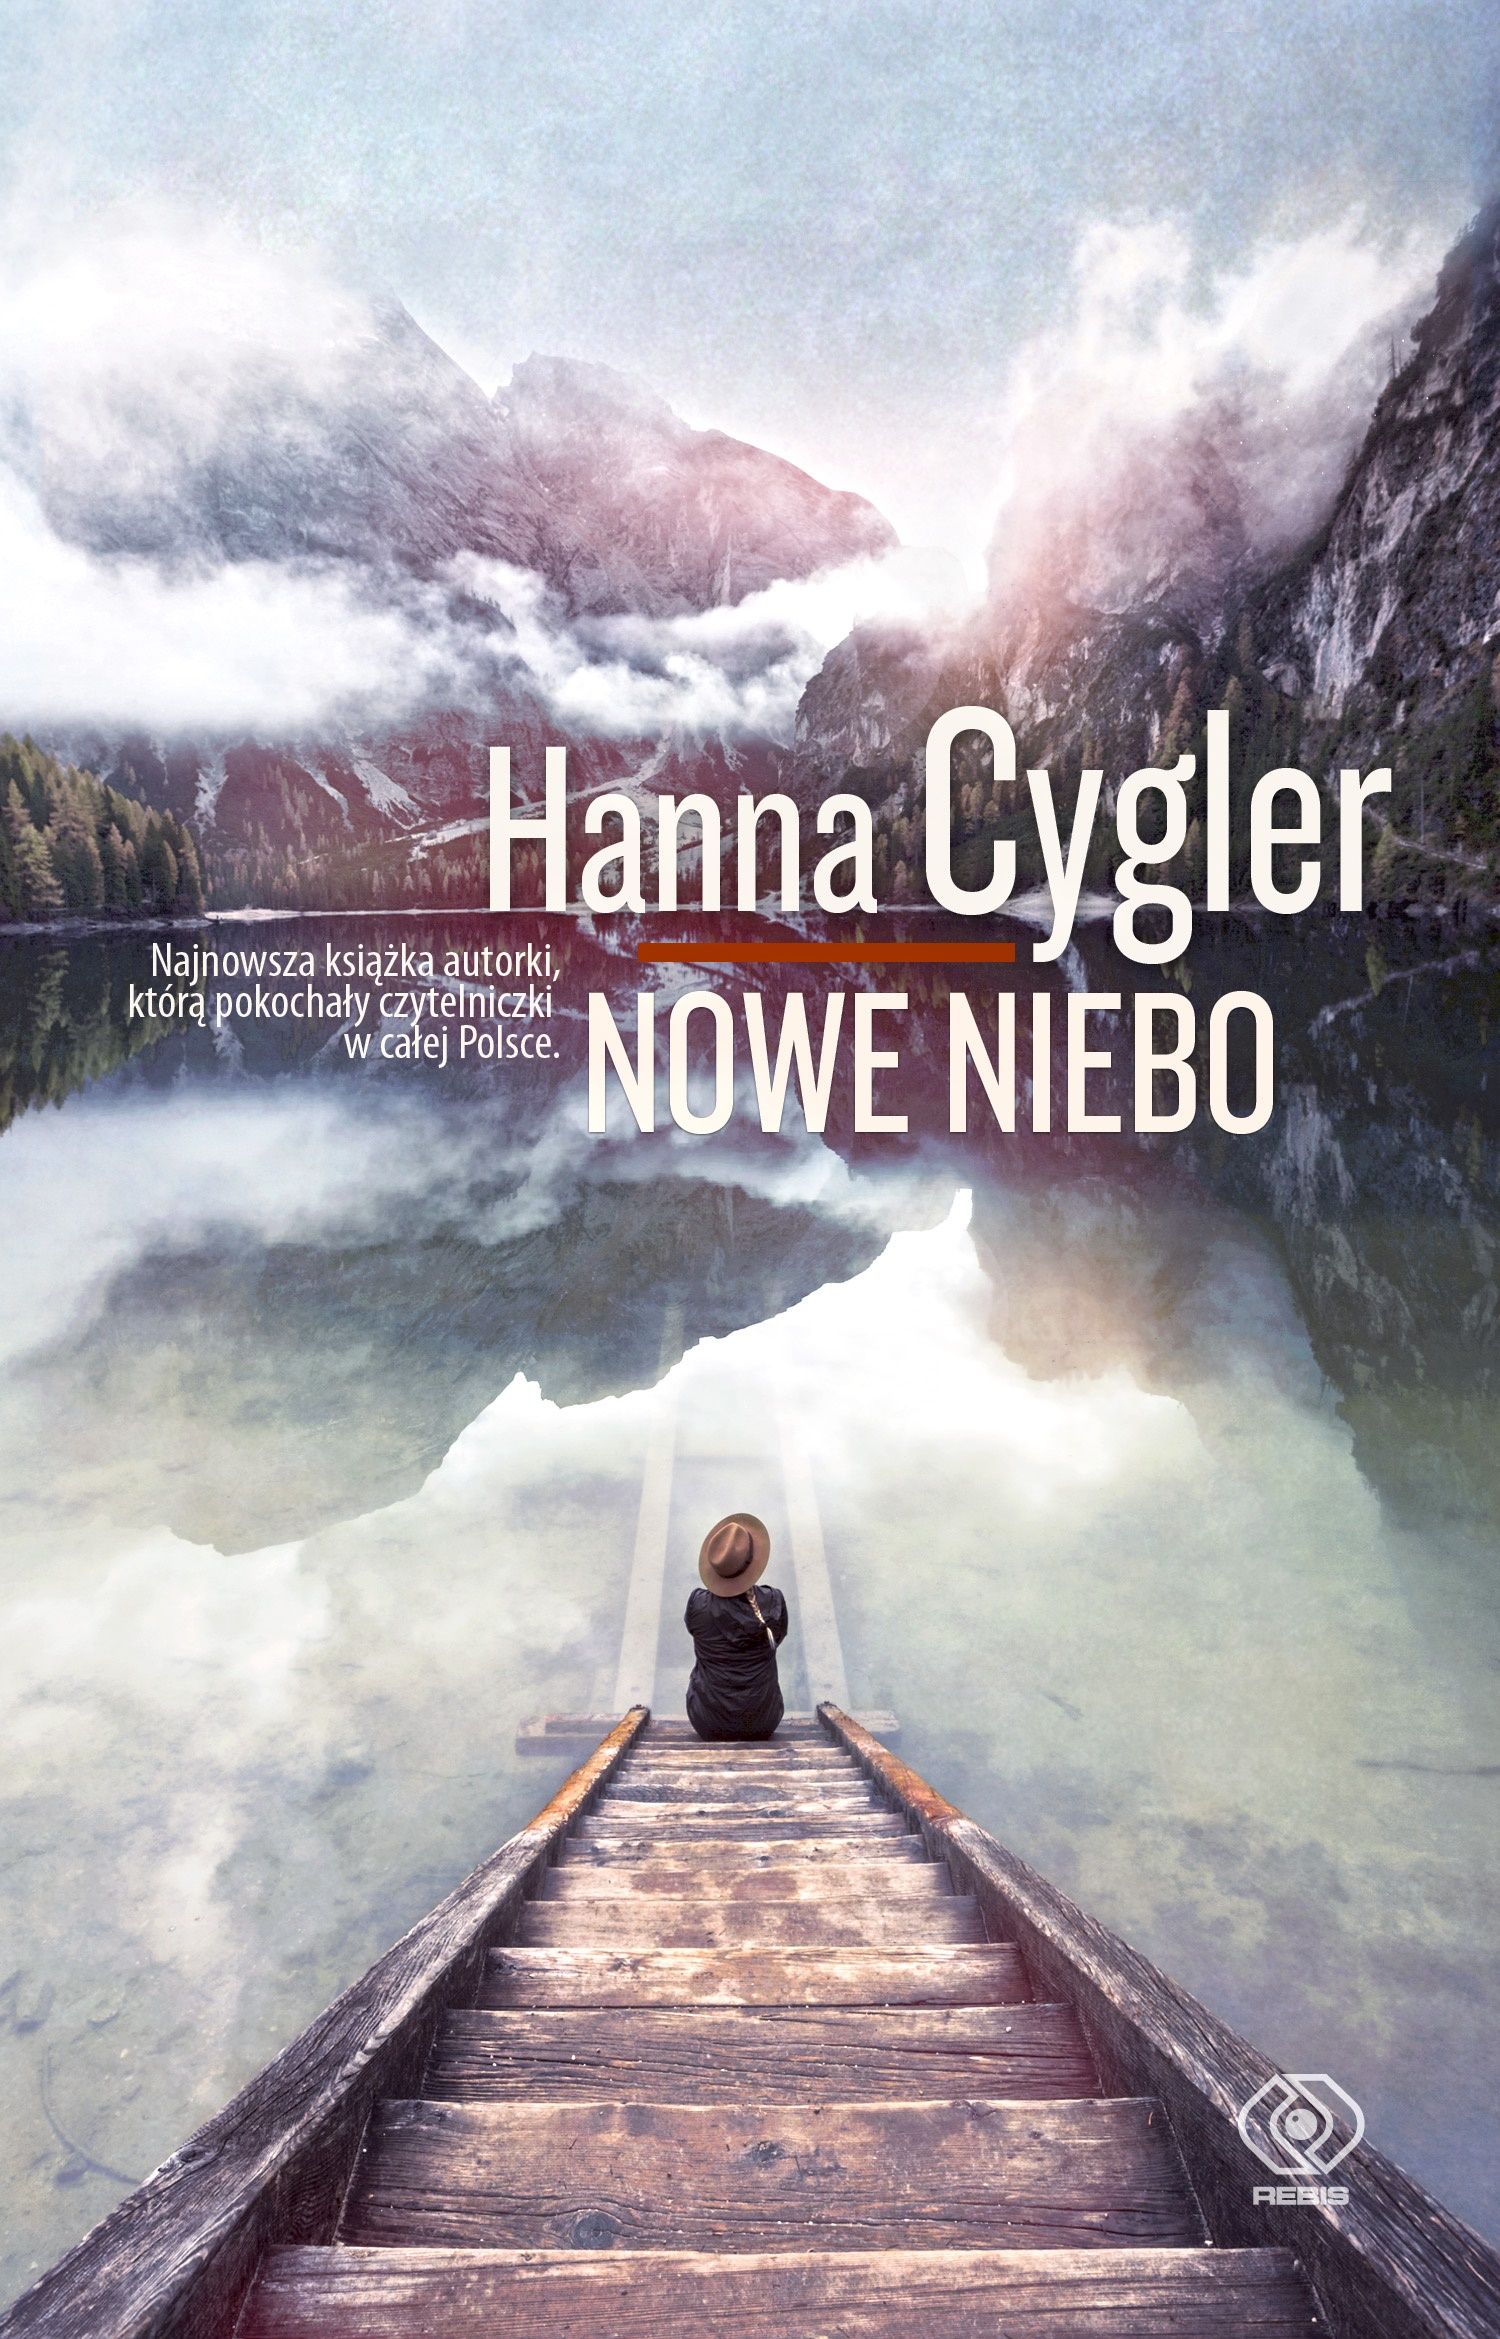  Nowe niebo, Hanna Cygler, Wydawca: DW REBIS 